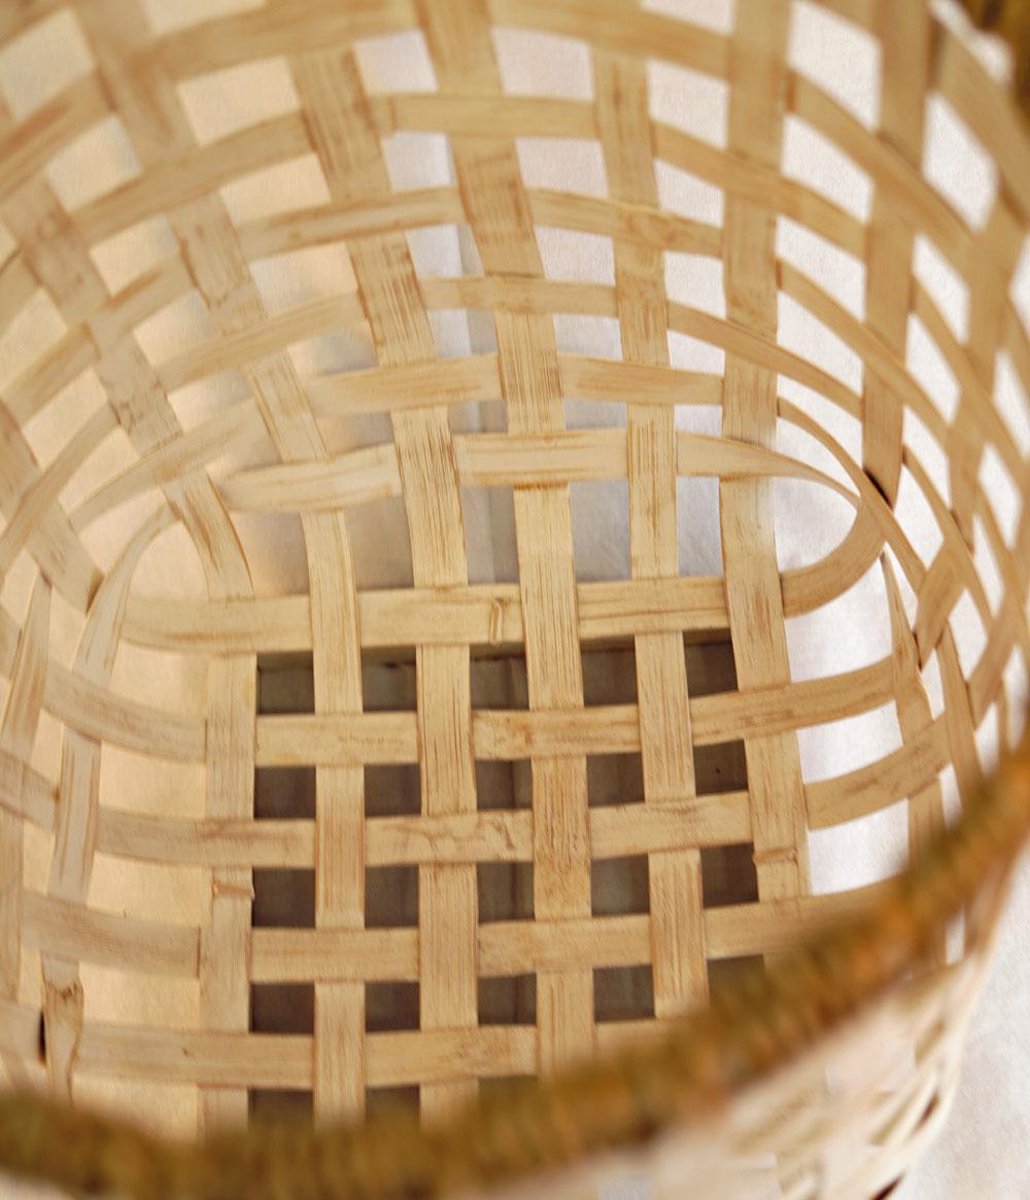 Nusa Originals - Handgemaakte Witte Bamboe Wasmand - Medium 40x50cm